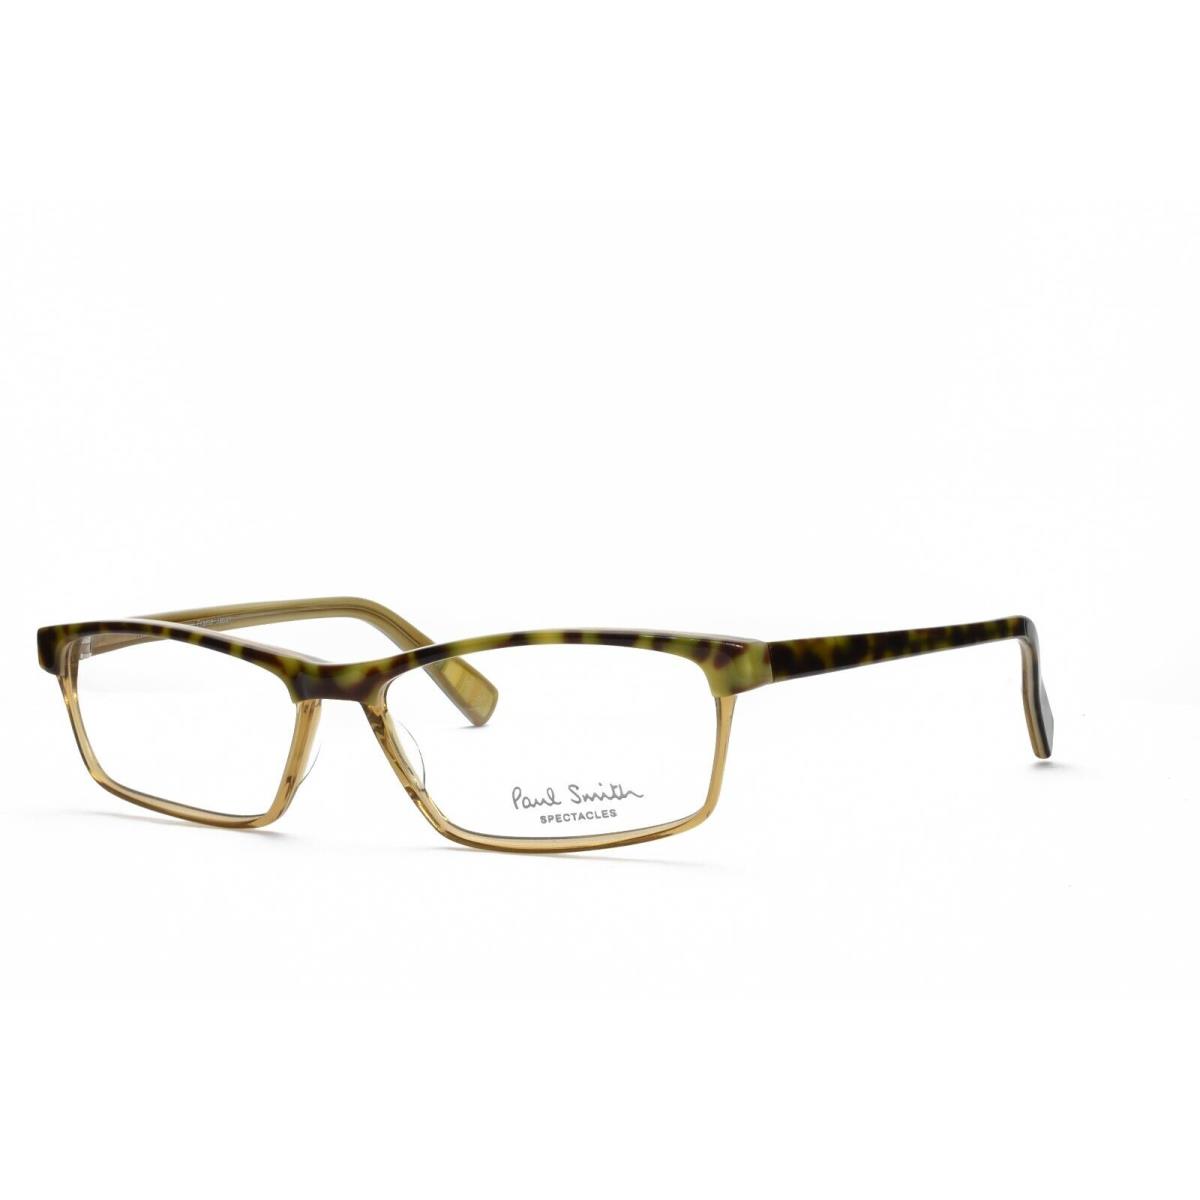 Paul Smith PS 287 OA108 Eyeglasses Frames Only 54-15-140